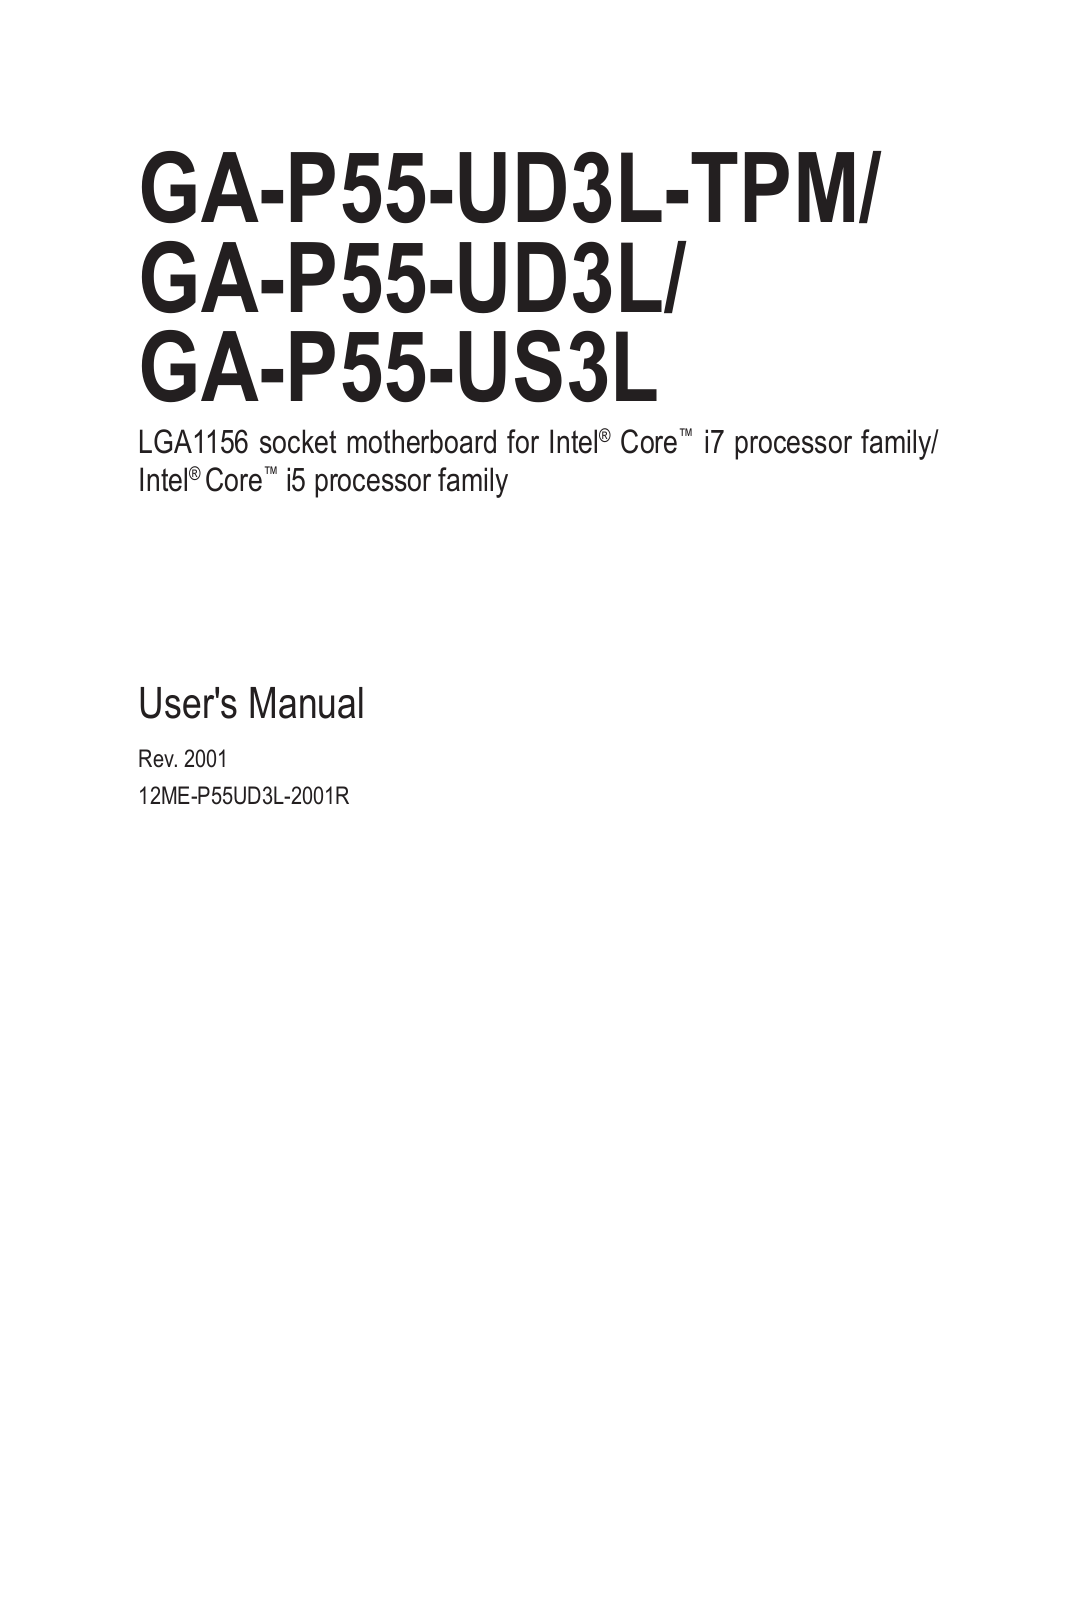 Gigabyte GA-P55-UD3L (rev. 2.0), GA-P55-US3L (rev. 2.0) User Manual